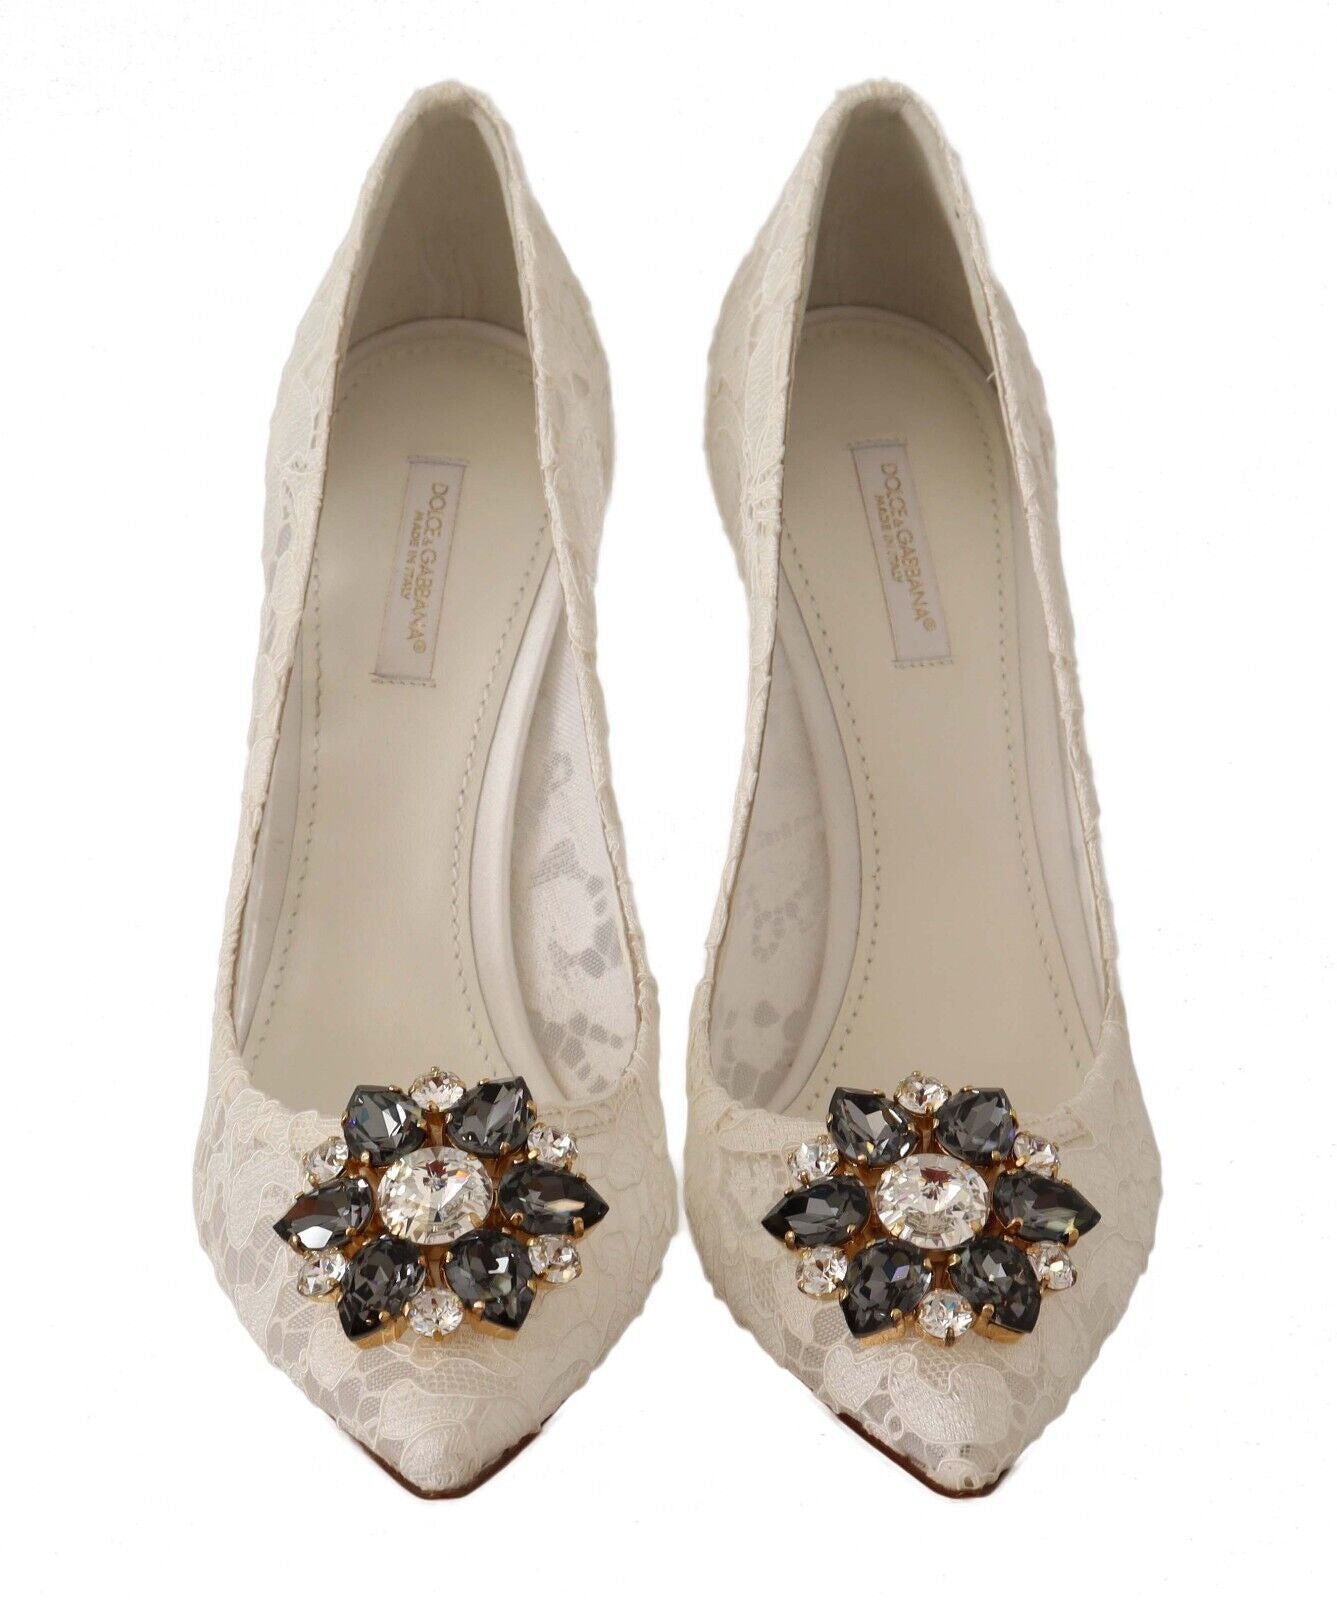 Elegant White Lace Heels with Crystal Embellishments